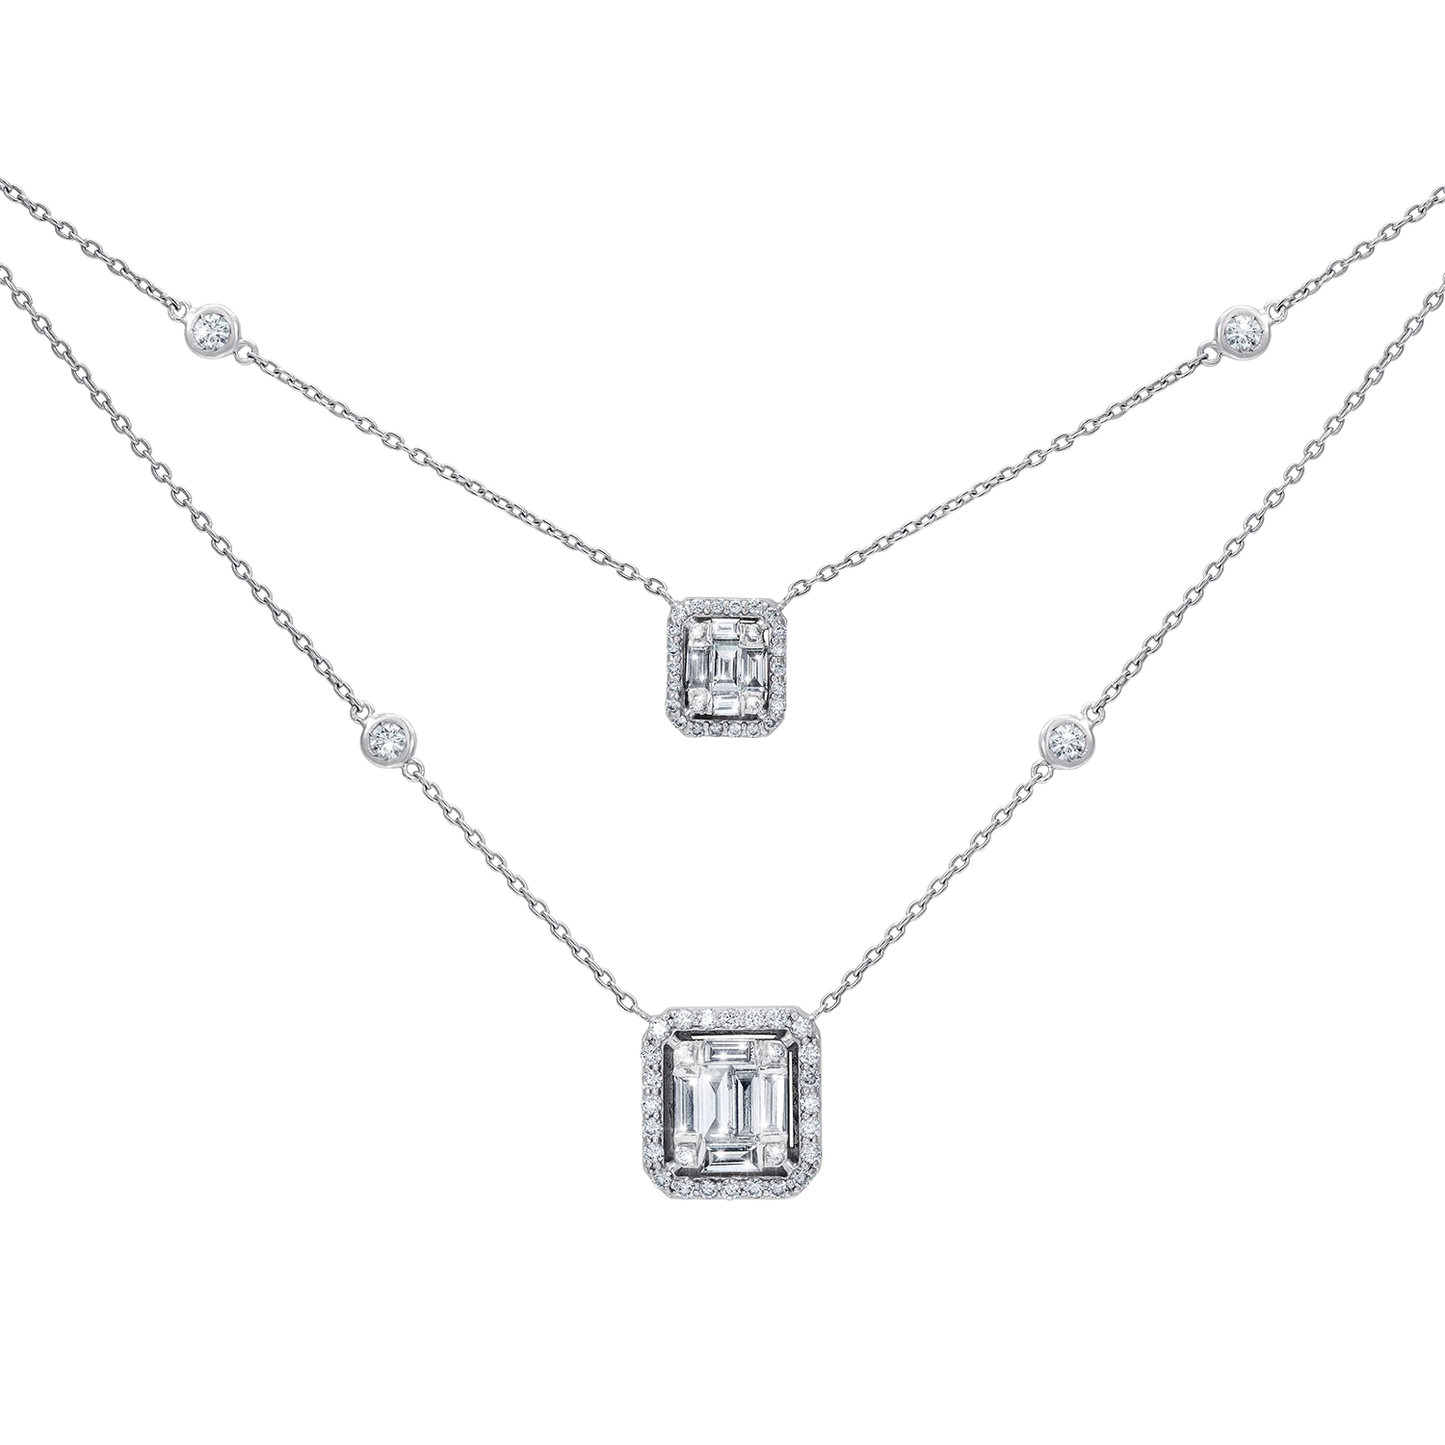 Twin-layered Diamond Pendant Chain